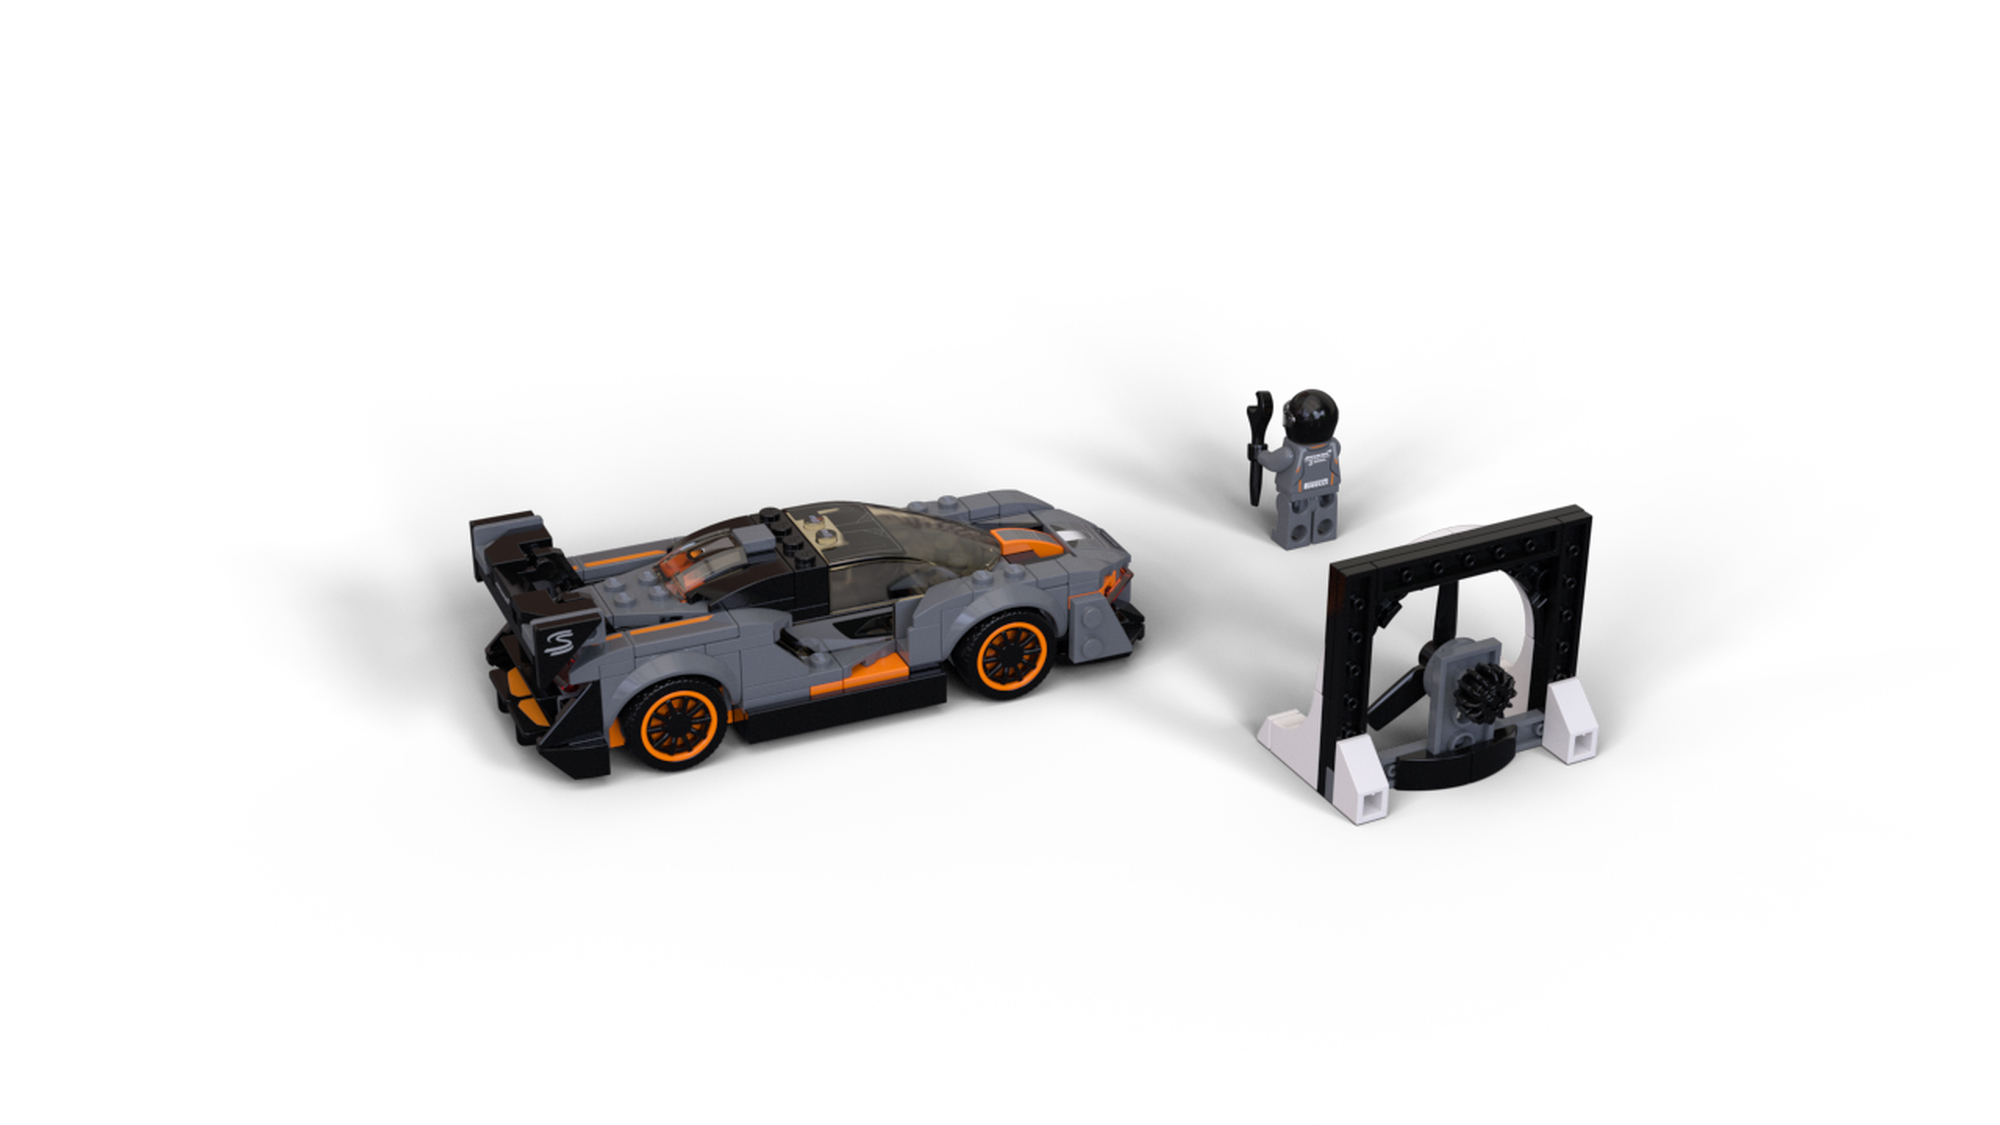 LEGO® Speed Champions 75892 McLaren Senna (2019) ab 19,99 € (Stand